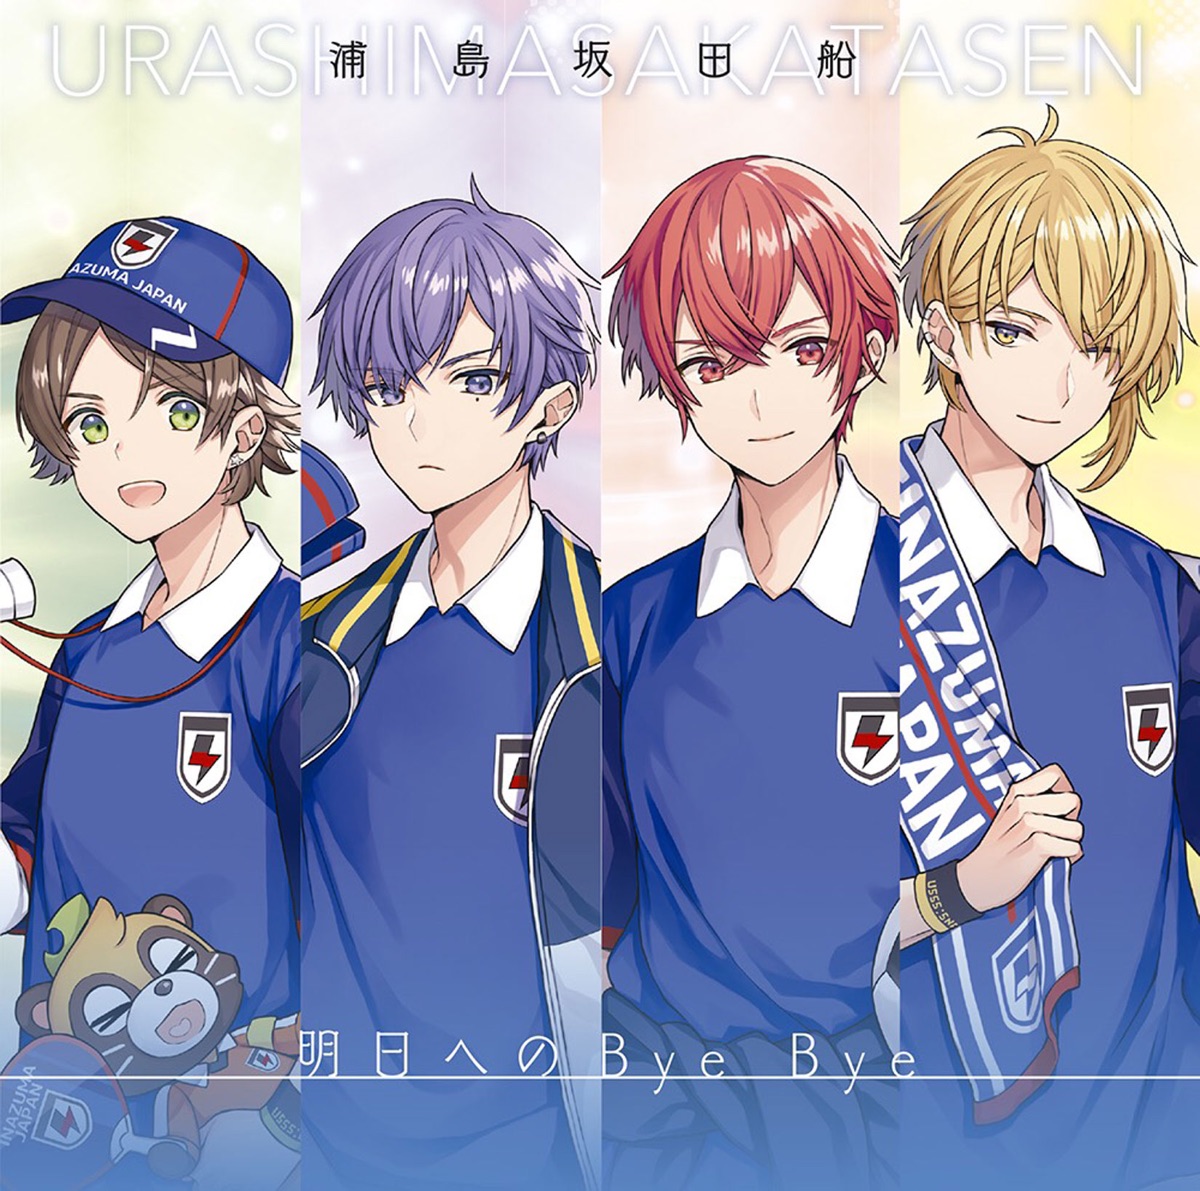 Cover for『Urashimasakatasen - Kassen』from the release『Ashita e no Bye Bye』